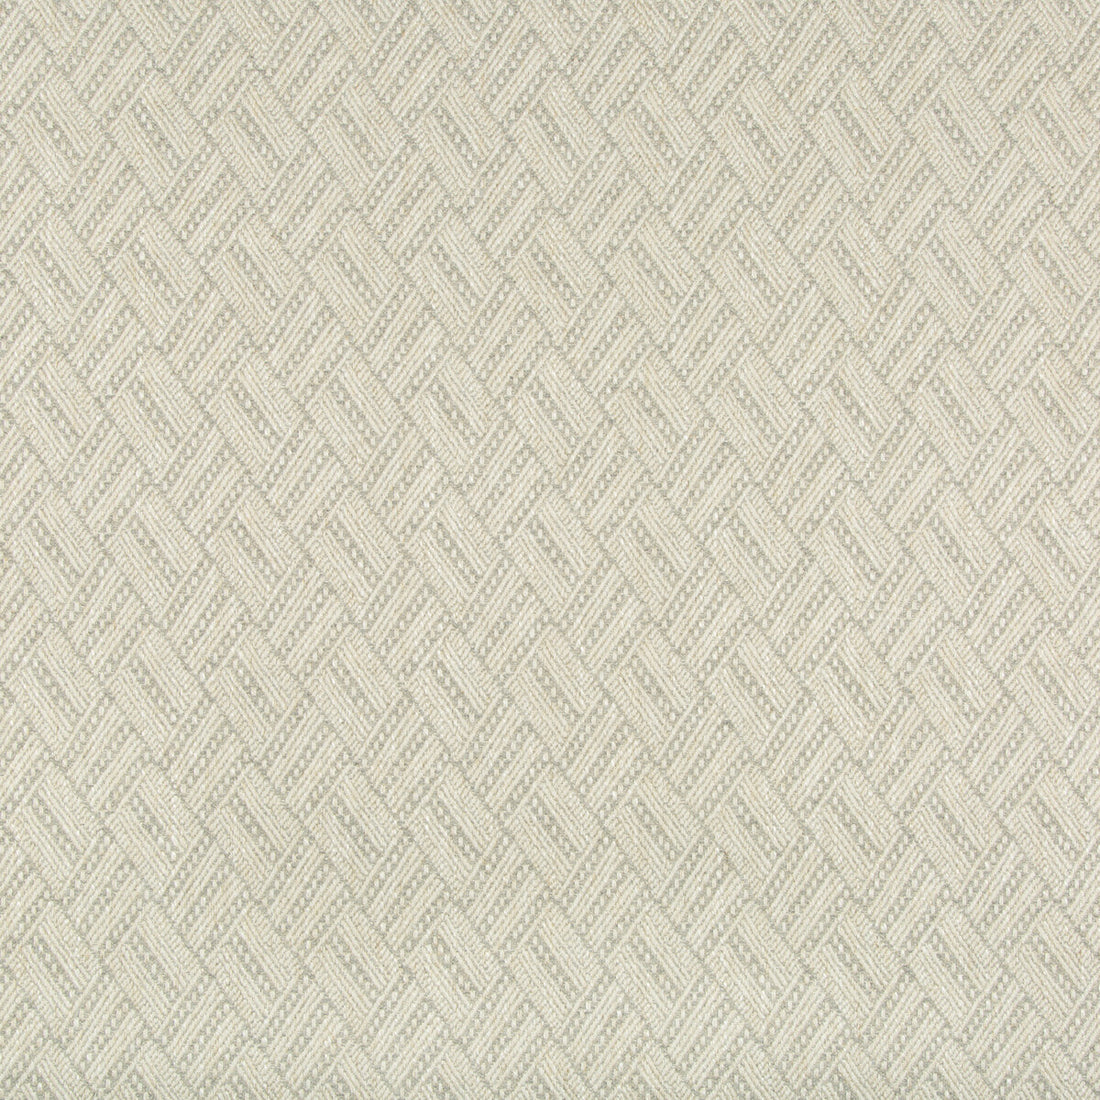 Kolmar fabric in grey color - pattern 2017159.11.0 - by Lee Jofa in the Westport collection